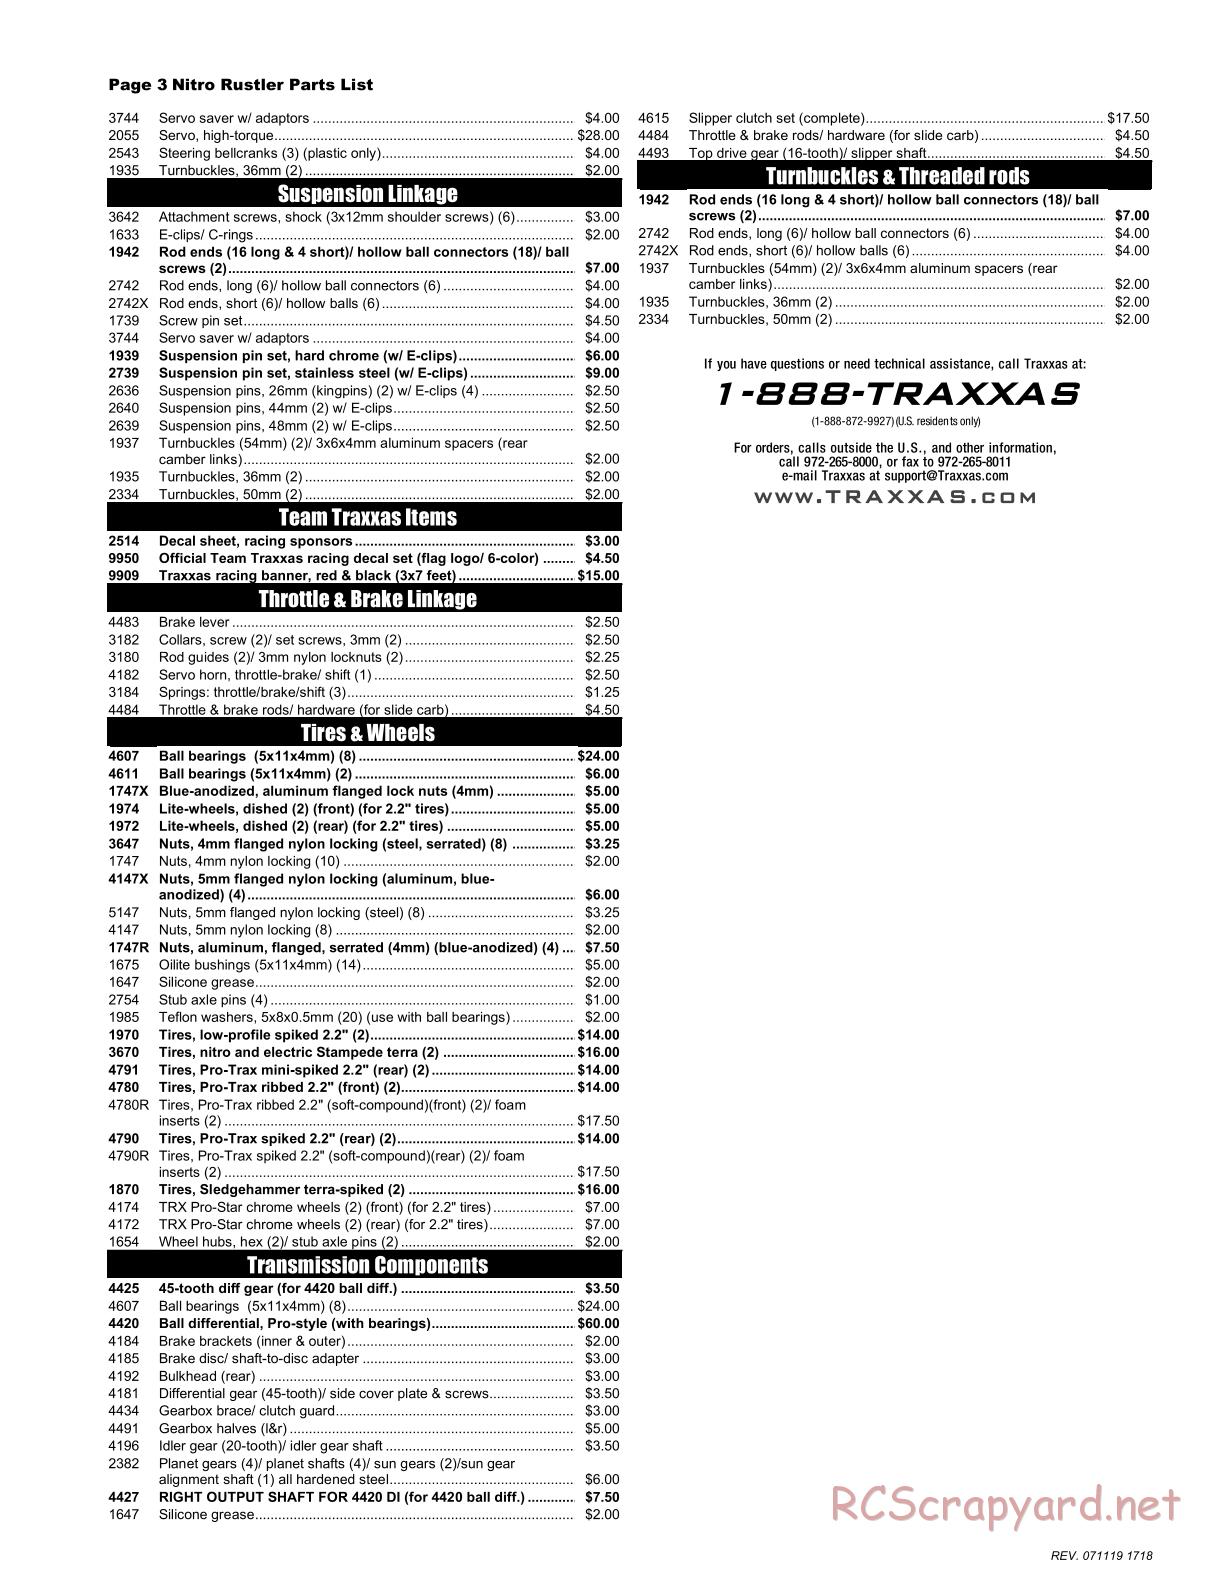 Traxxas - Nitro Rustler 2.5 (2003) - Parts List - Page 3